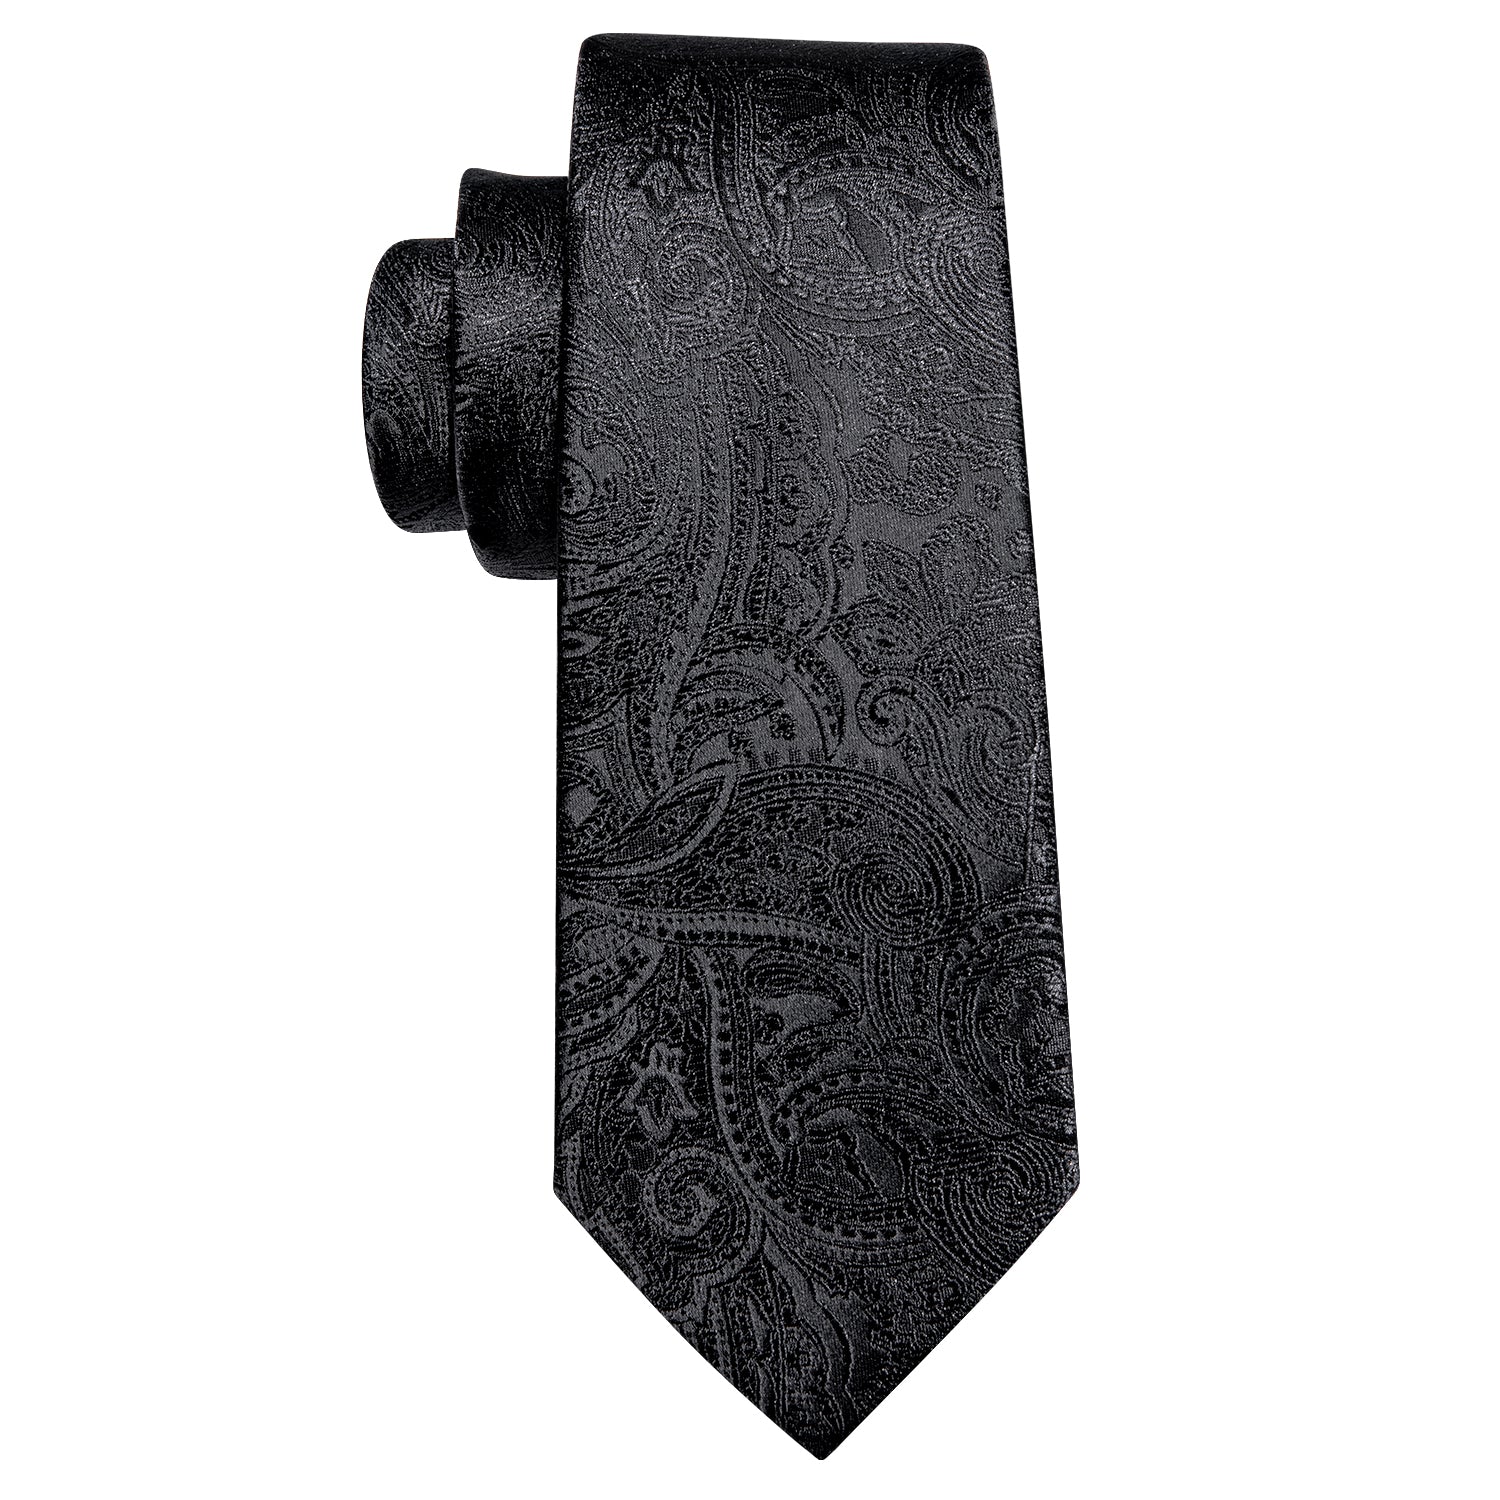 Black Paisley Tie Pocket Square Cufflinks Set